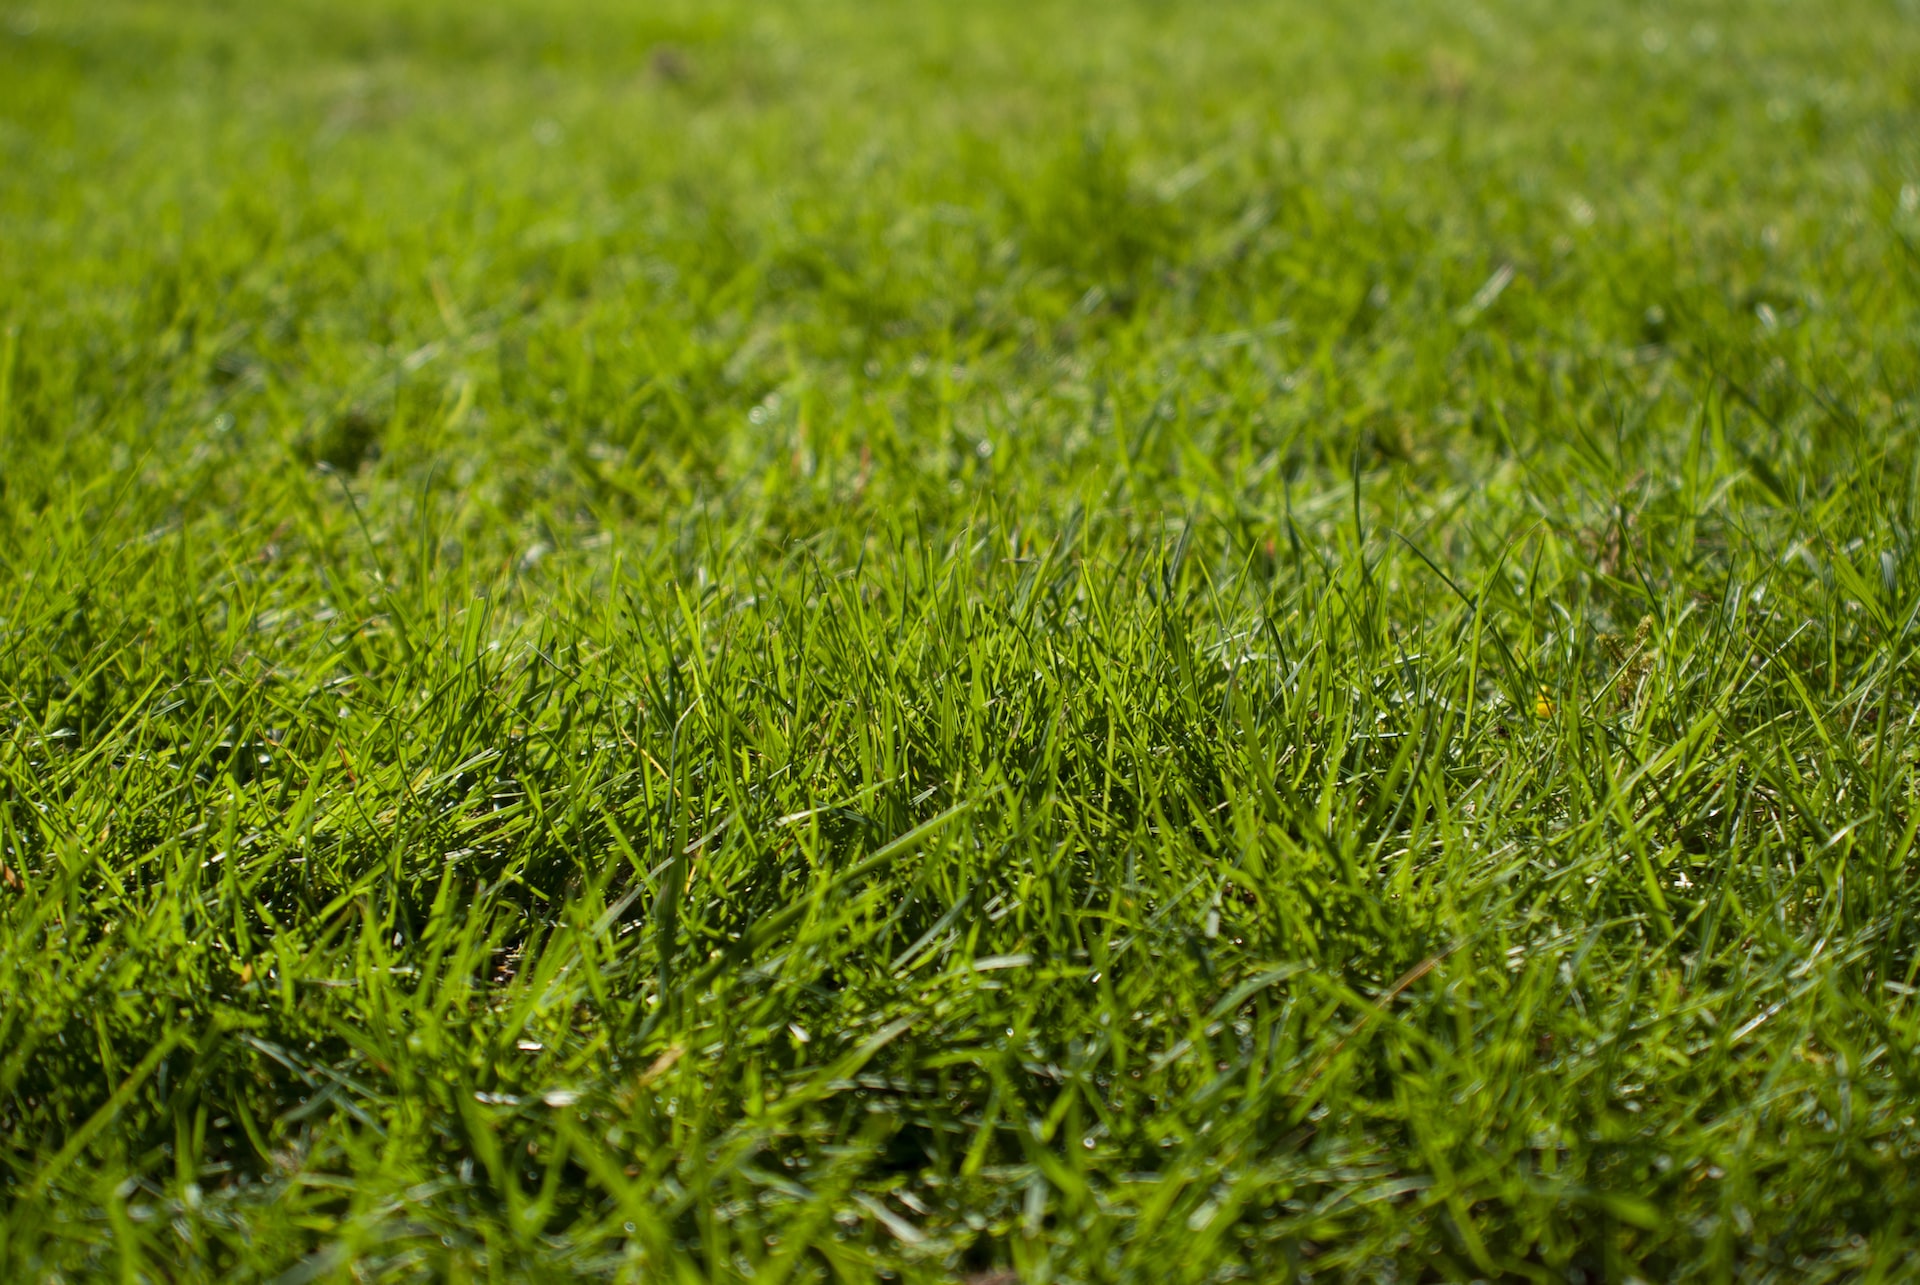 Will roll grass work in any garden?